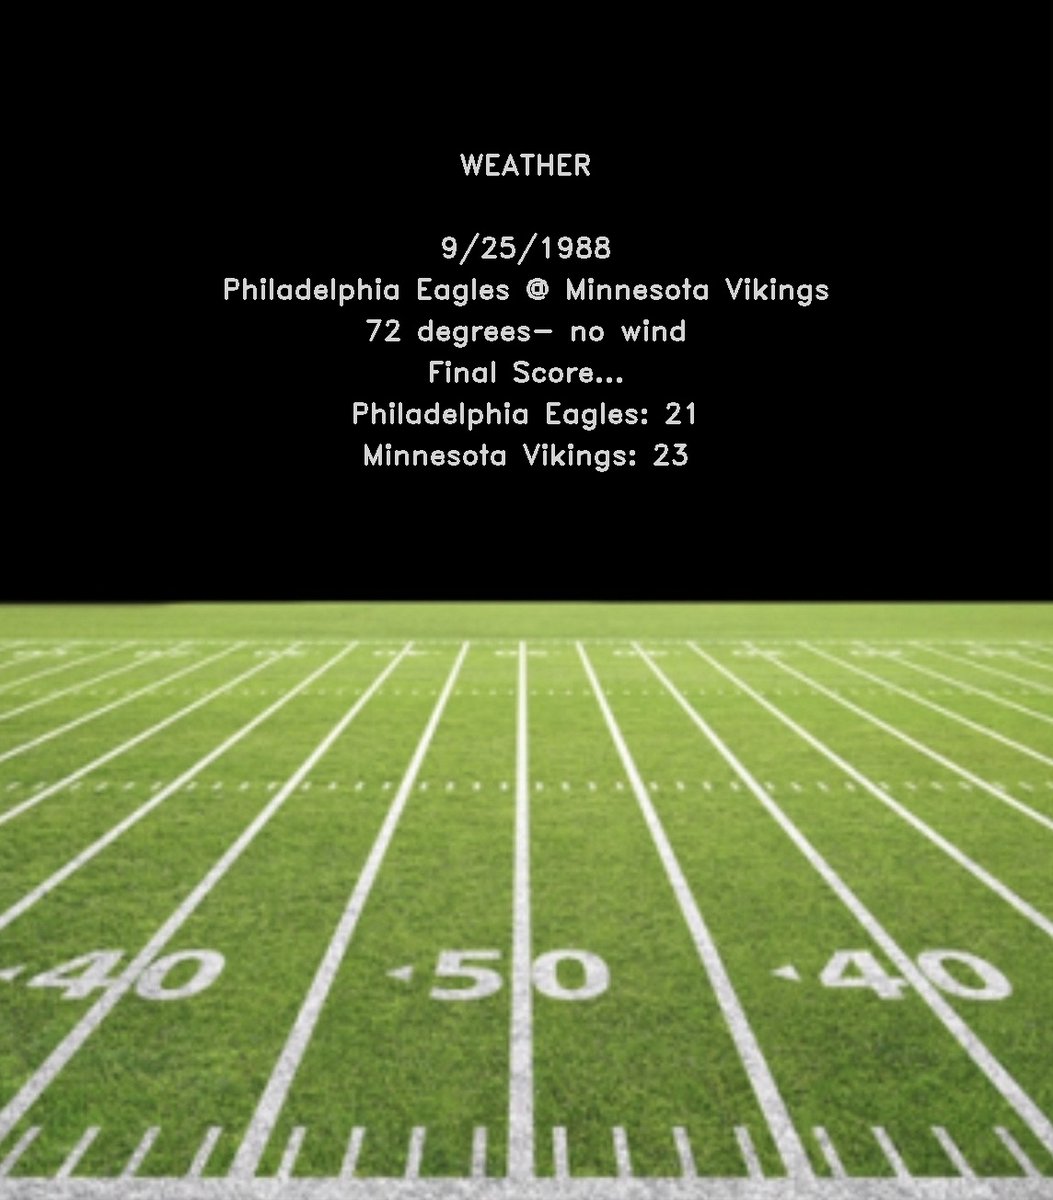 WEATHER

9/25/1988
Philadelphia Eagles @ Minnesota Vikings
72 degrees- no wind
Final Score...
Philadelphia Eagles: 21
Minnesota Vikings: 23

#NFL #SKOL #FlyEaglesFly https://t.co/ft44rqAAjt